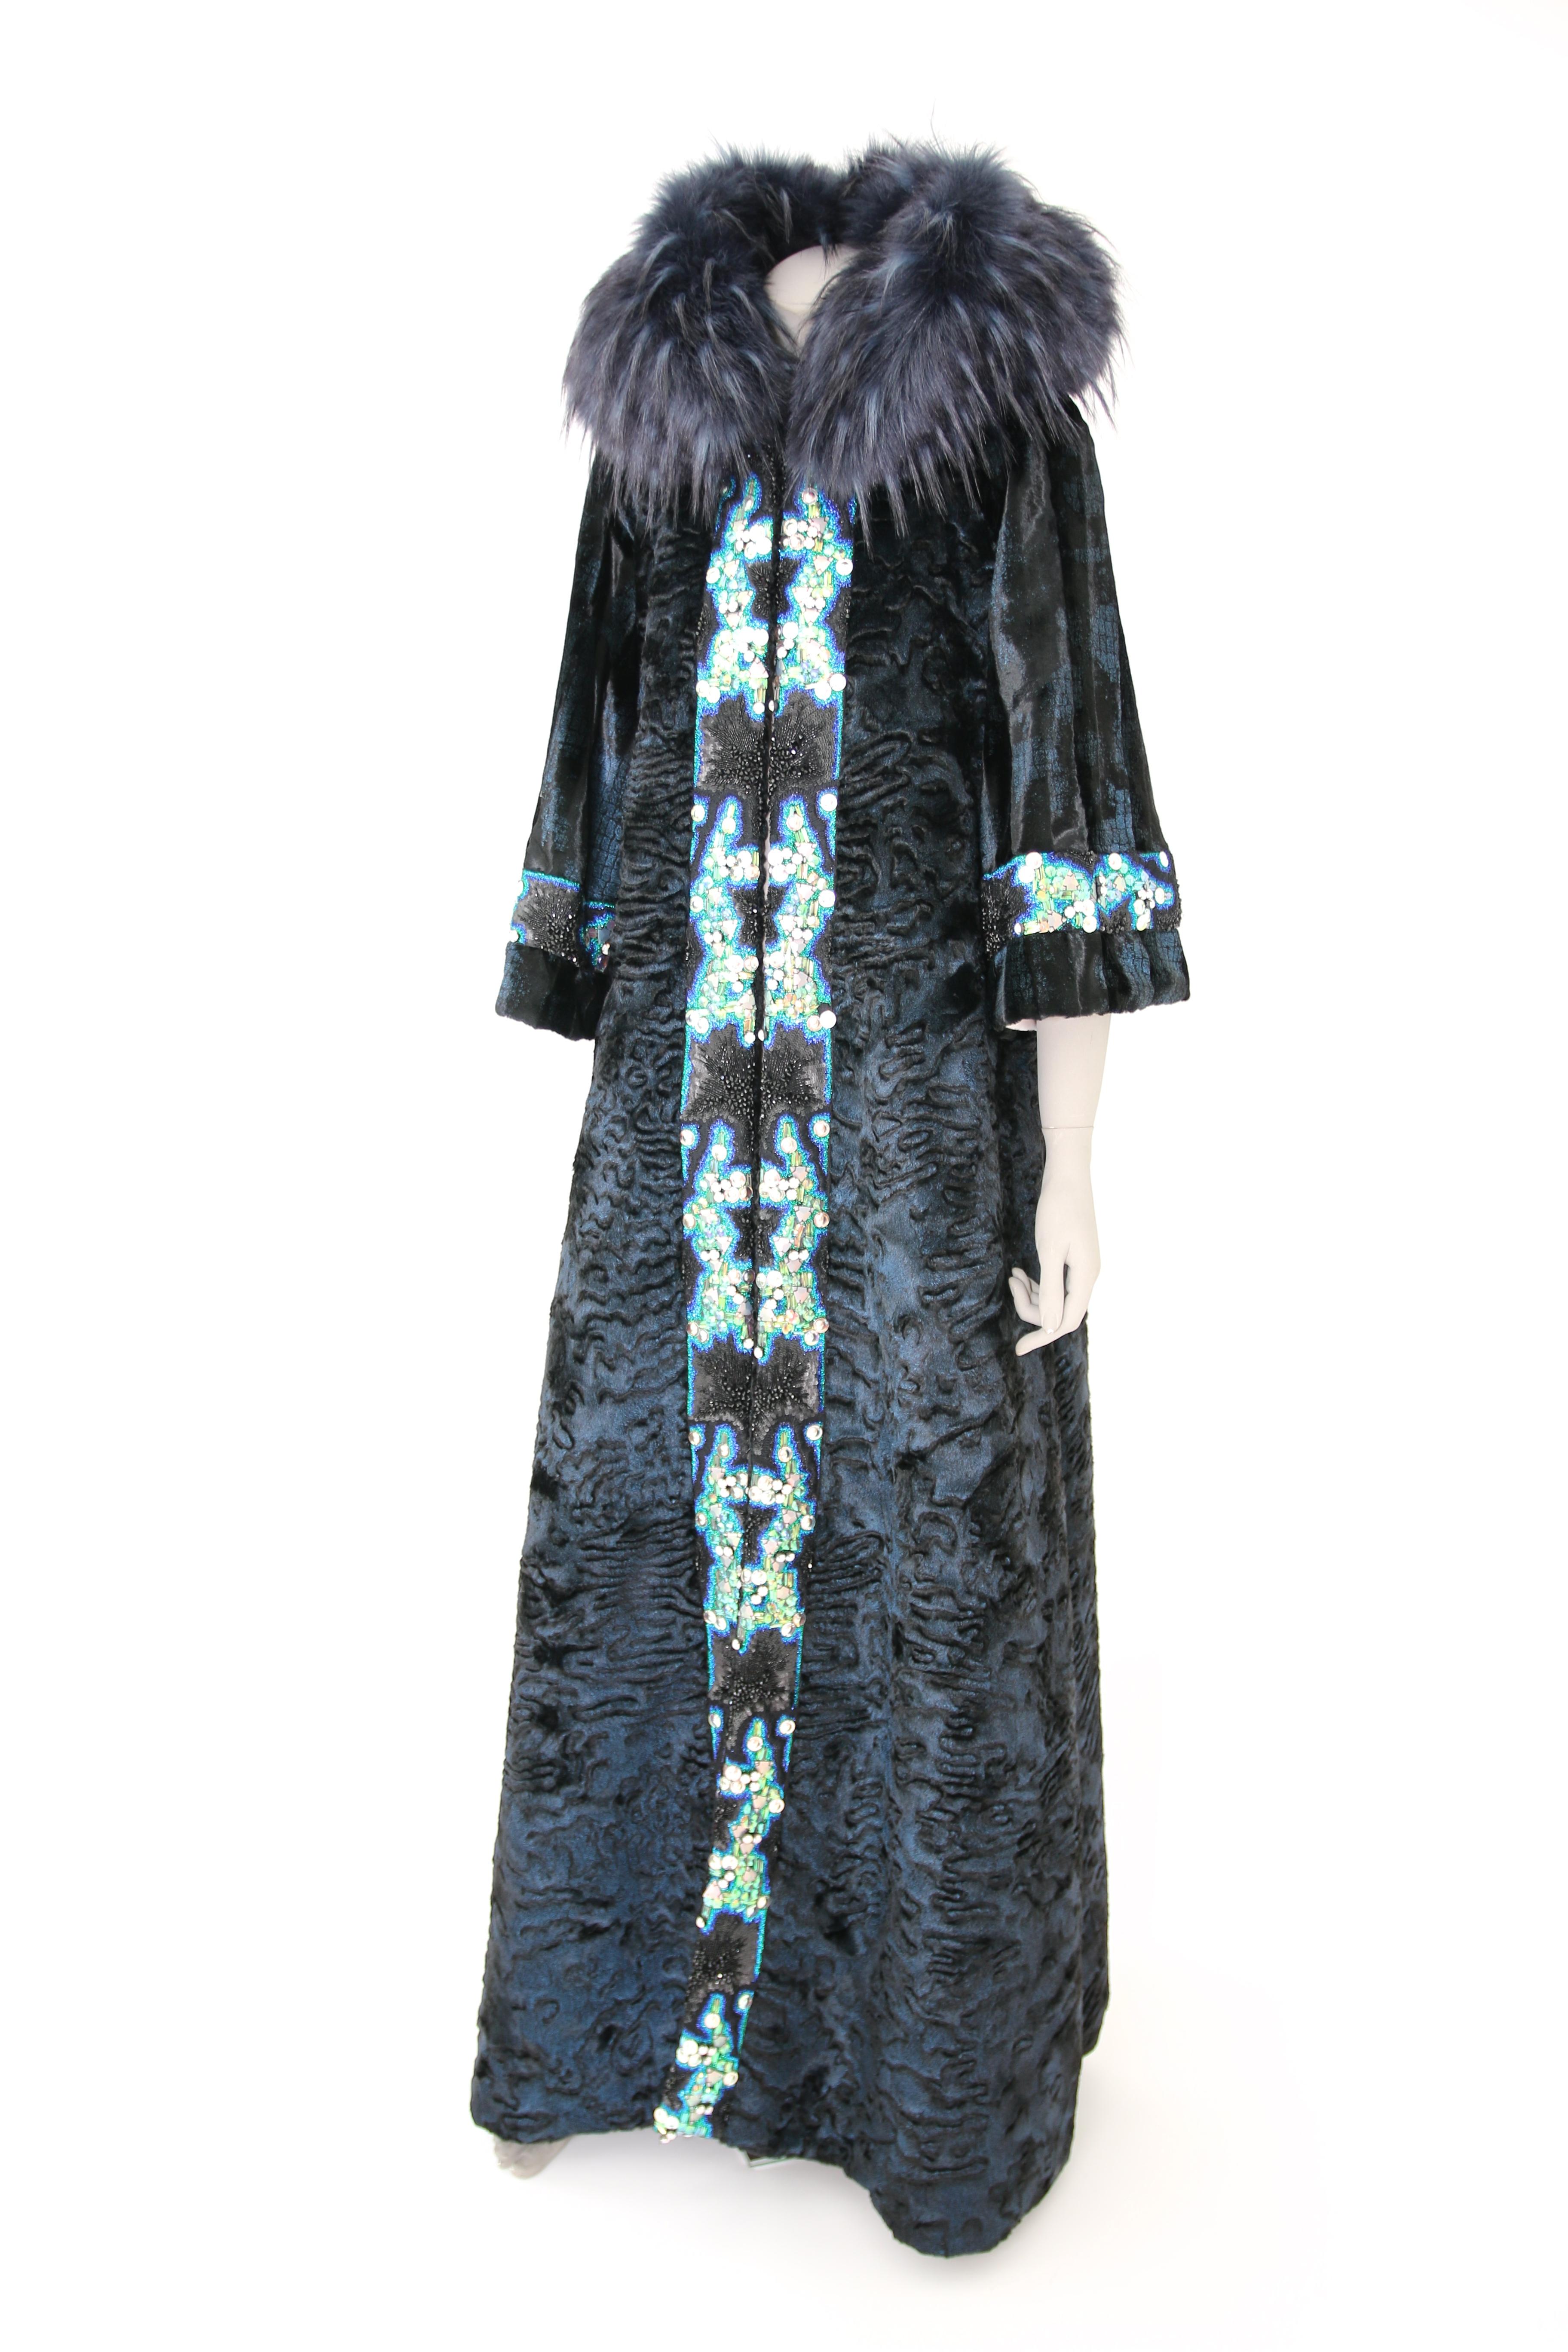 Women's Pelush Blue Faux Fur Astrakhan Caftan Coat W/Embroidery And Detachable Hood - S For Sale